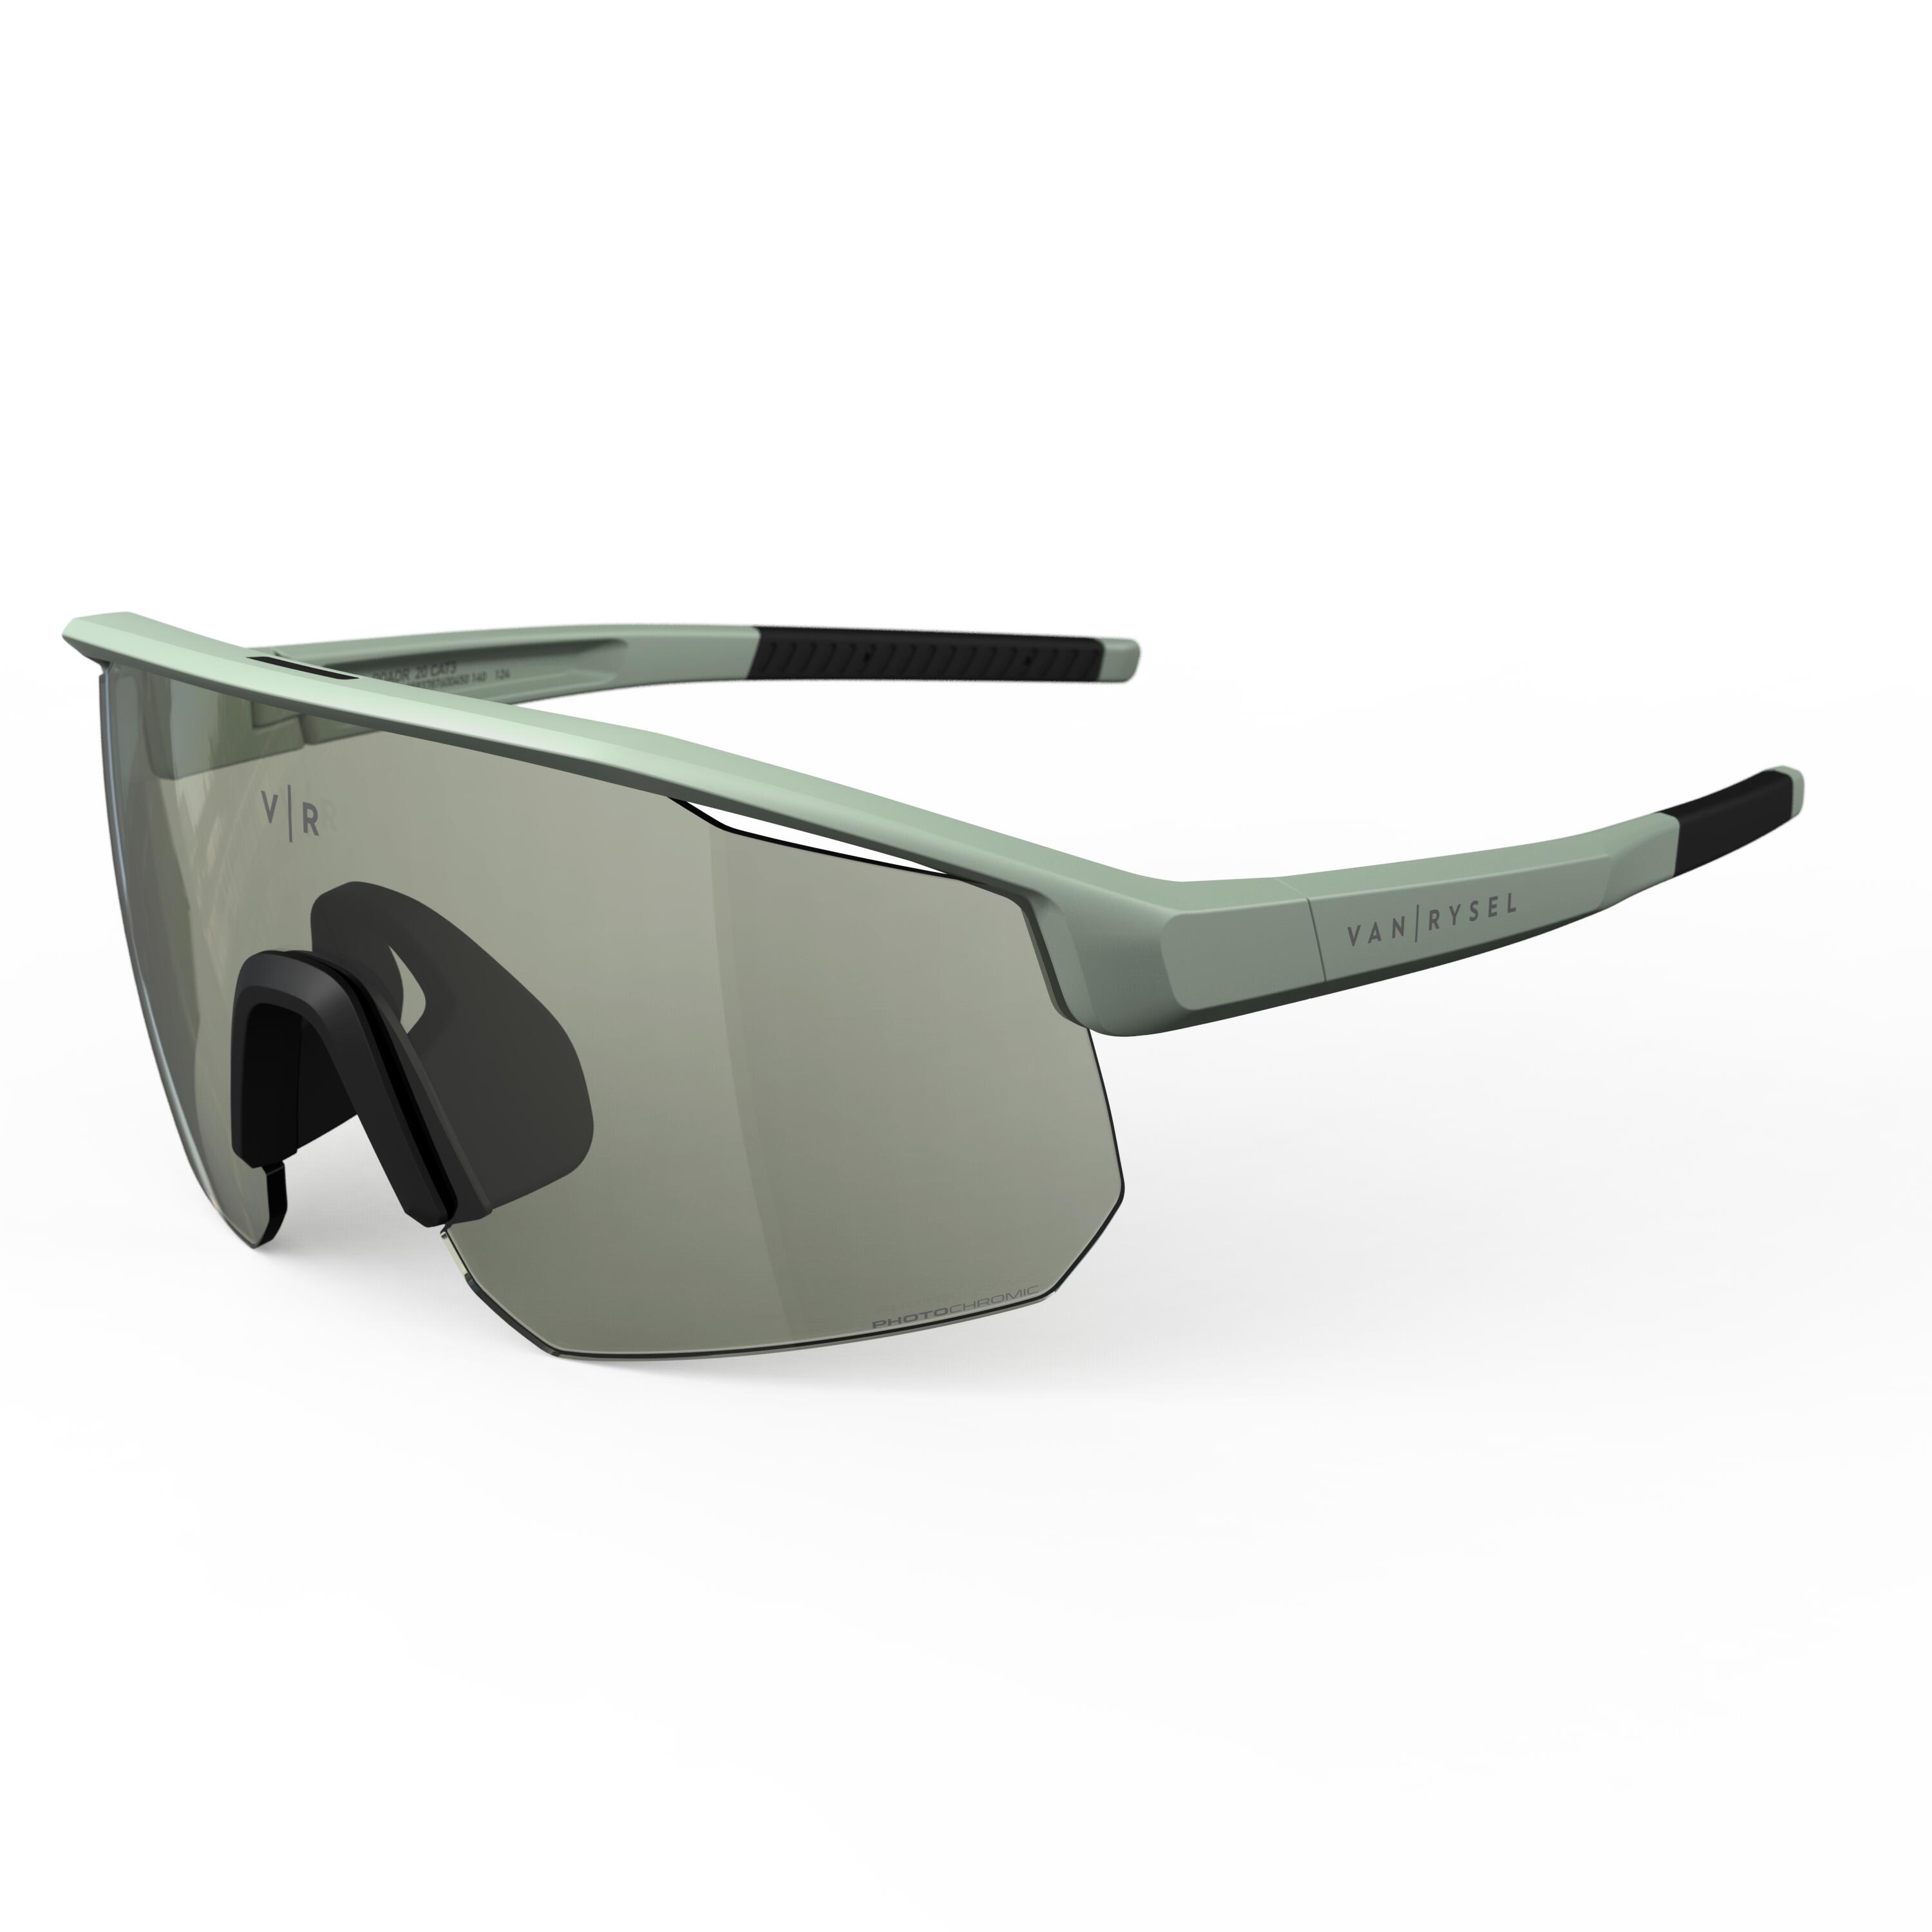 Photochromatic Cycling Glasses - RoadR 900 Grey